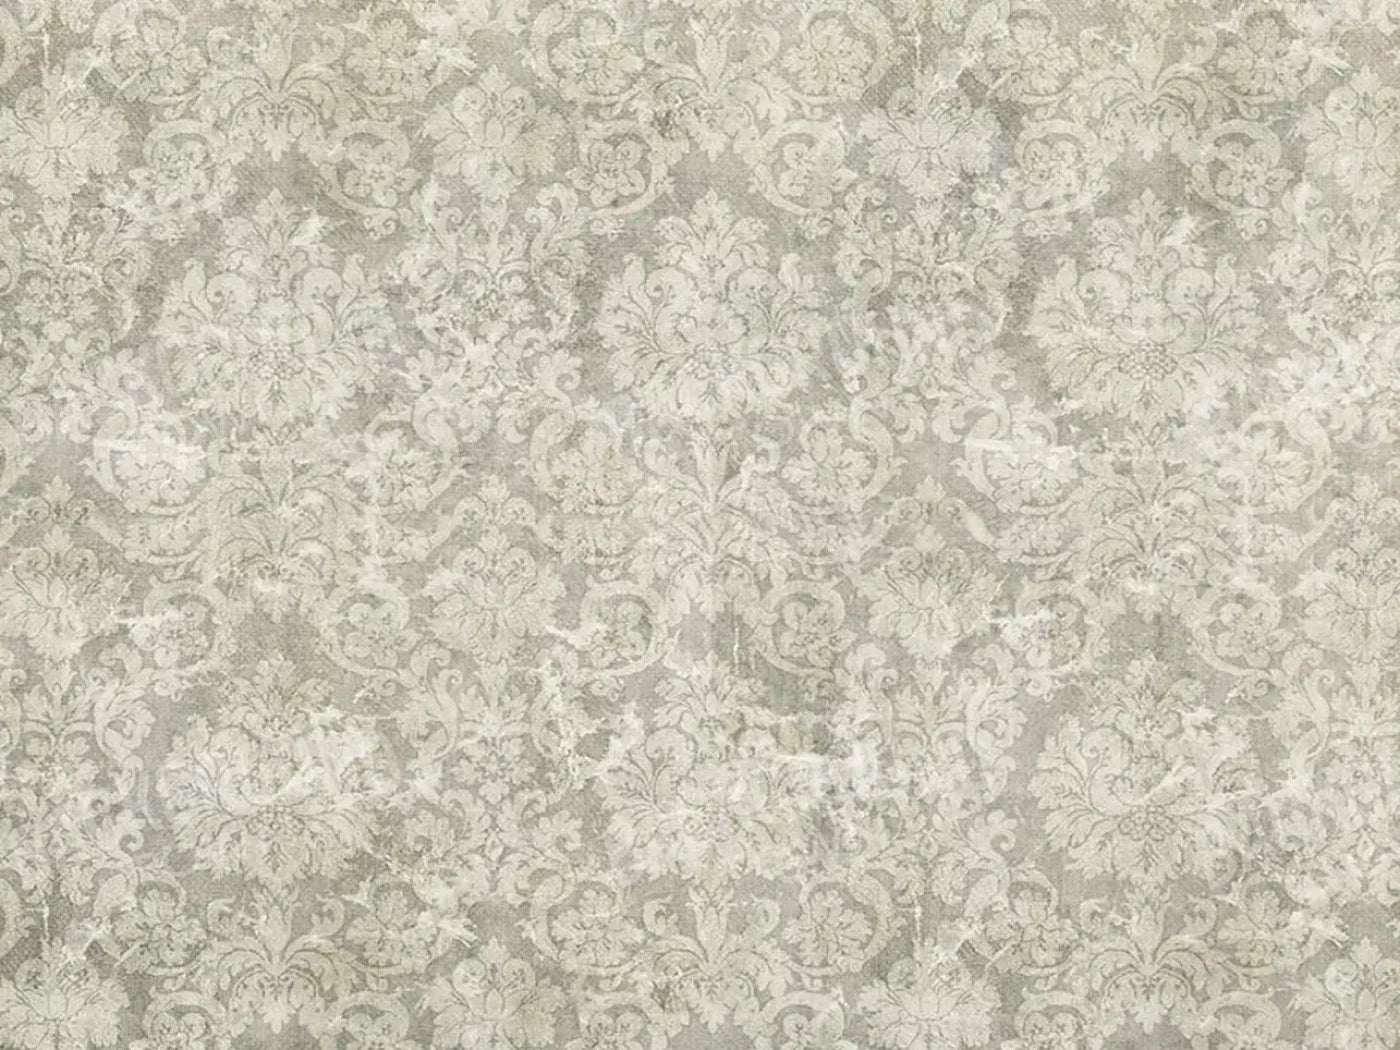 Damask Lace 68X5 Fleece ( 80 X 60 Inch ) Backdrop